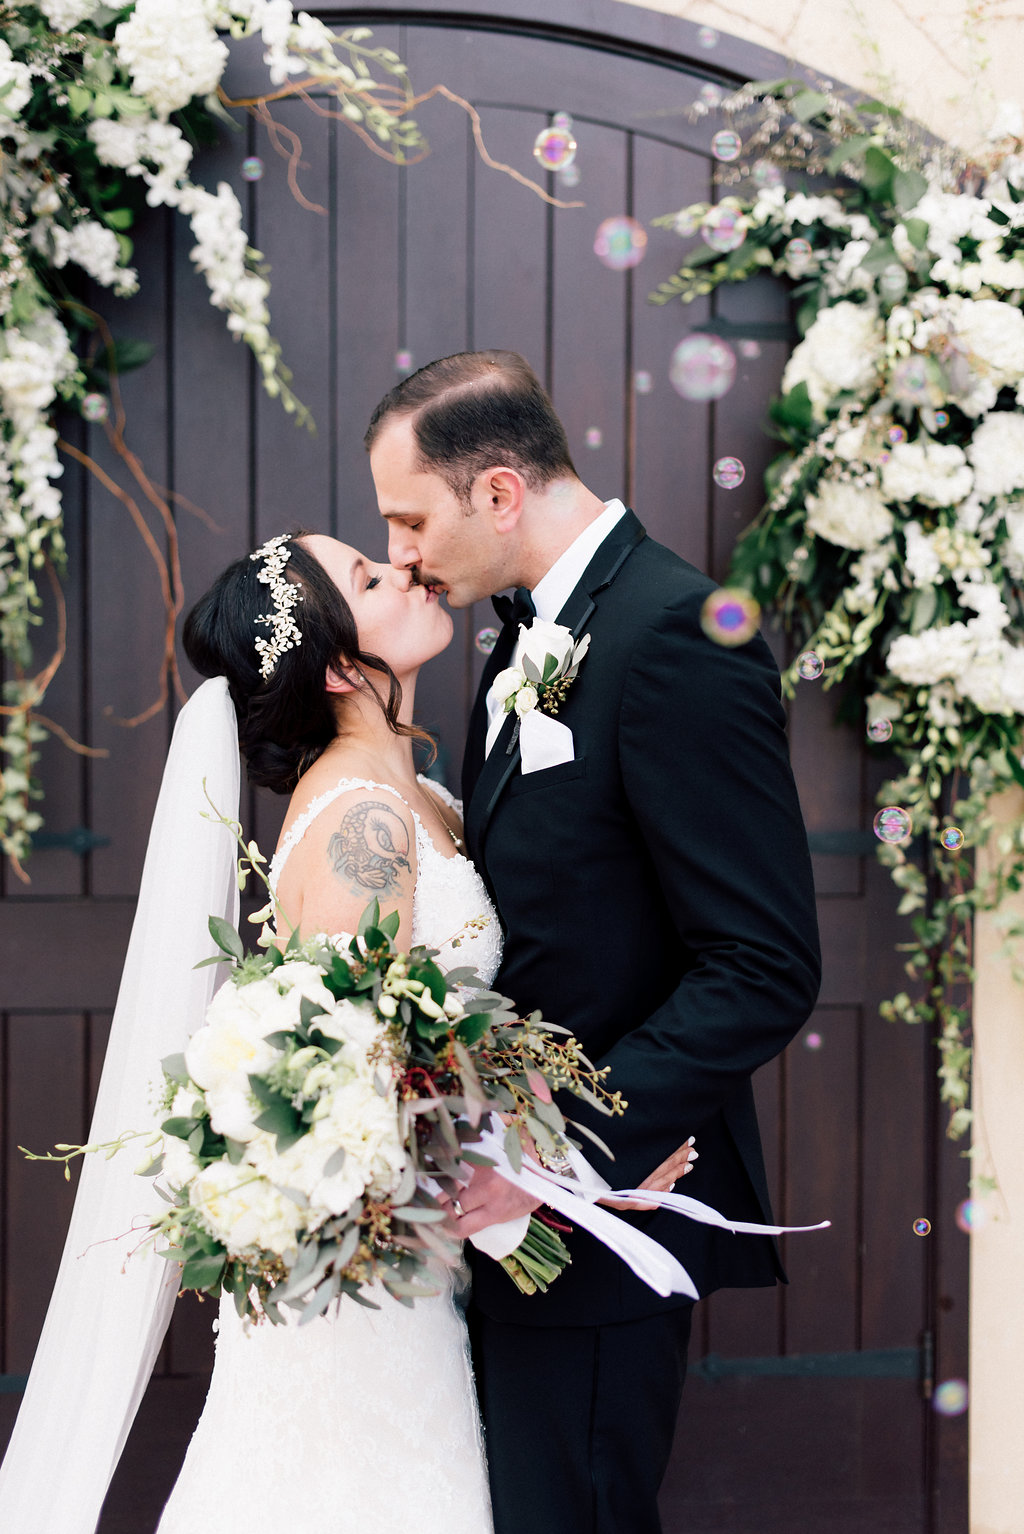 Thousand Oaks Garden Wedding Venue Los Robles Greens - The Overwhelmed Bride Wedding Blog